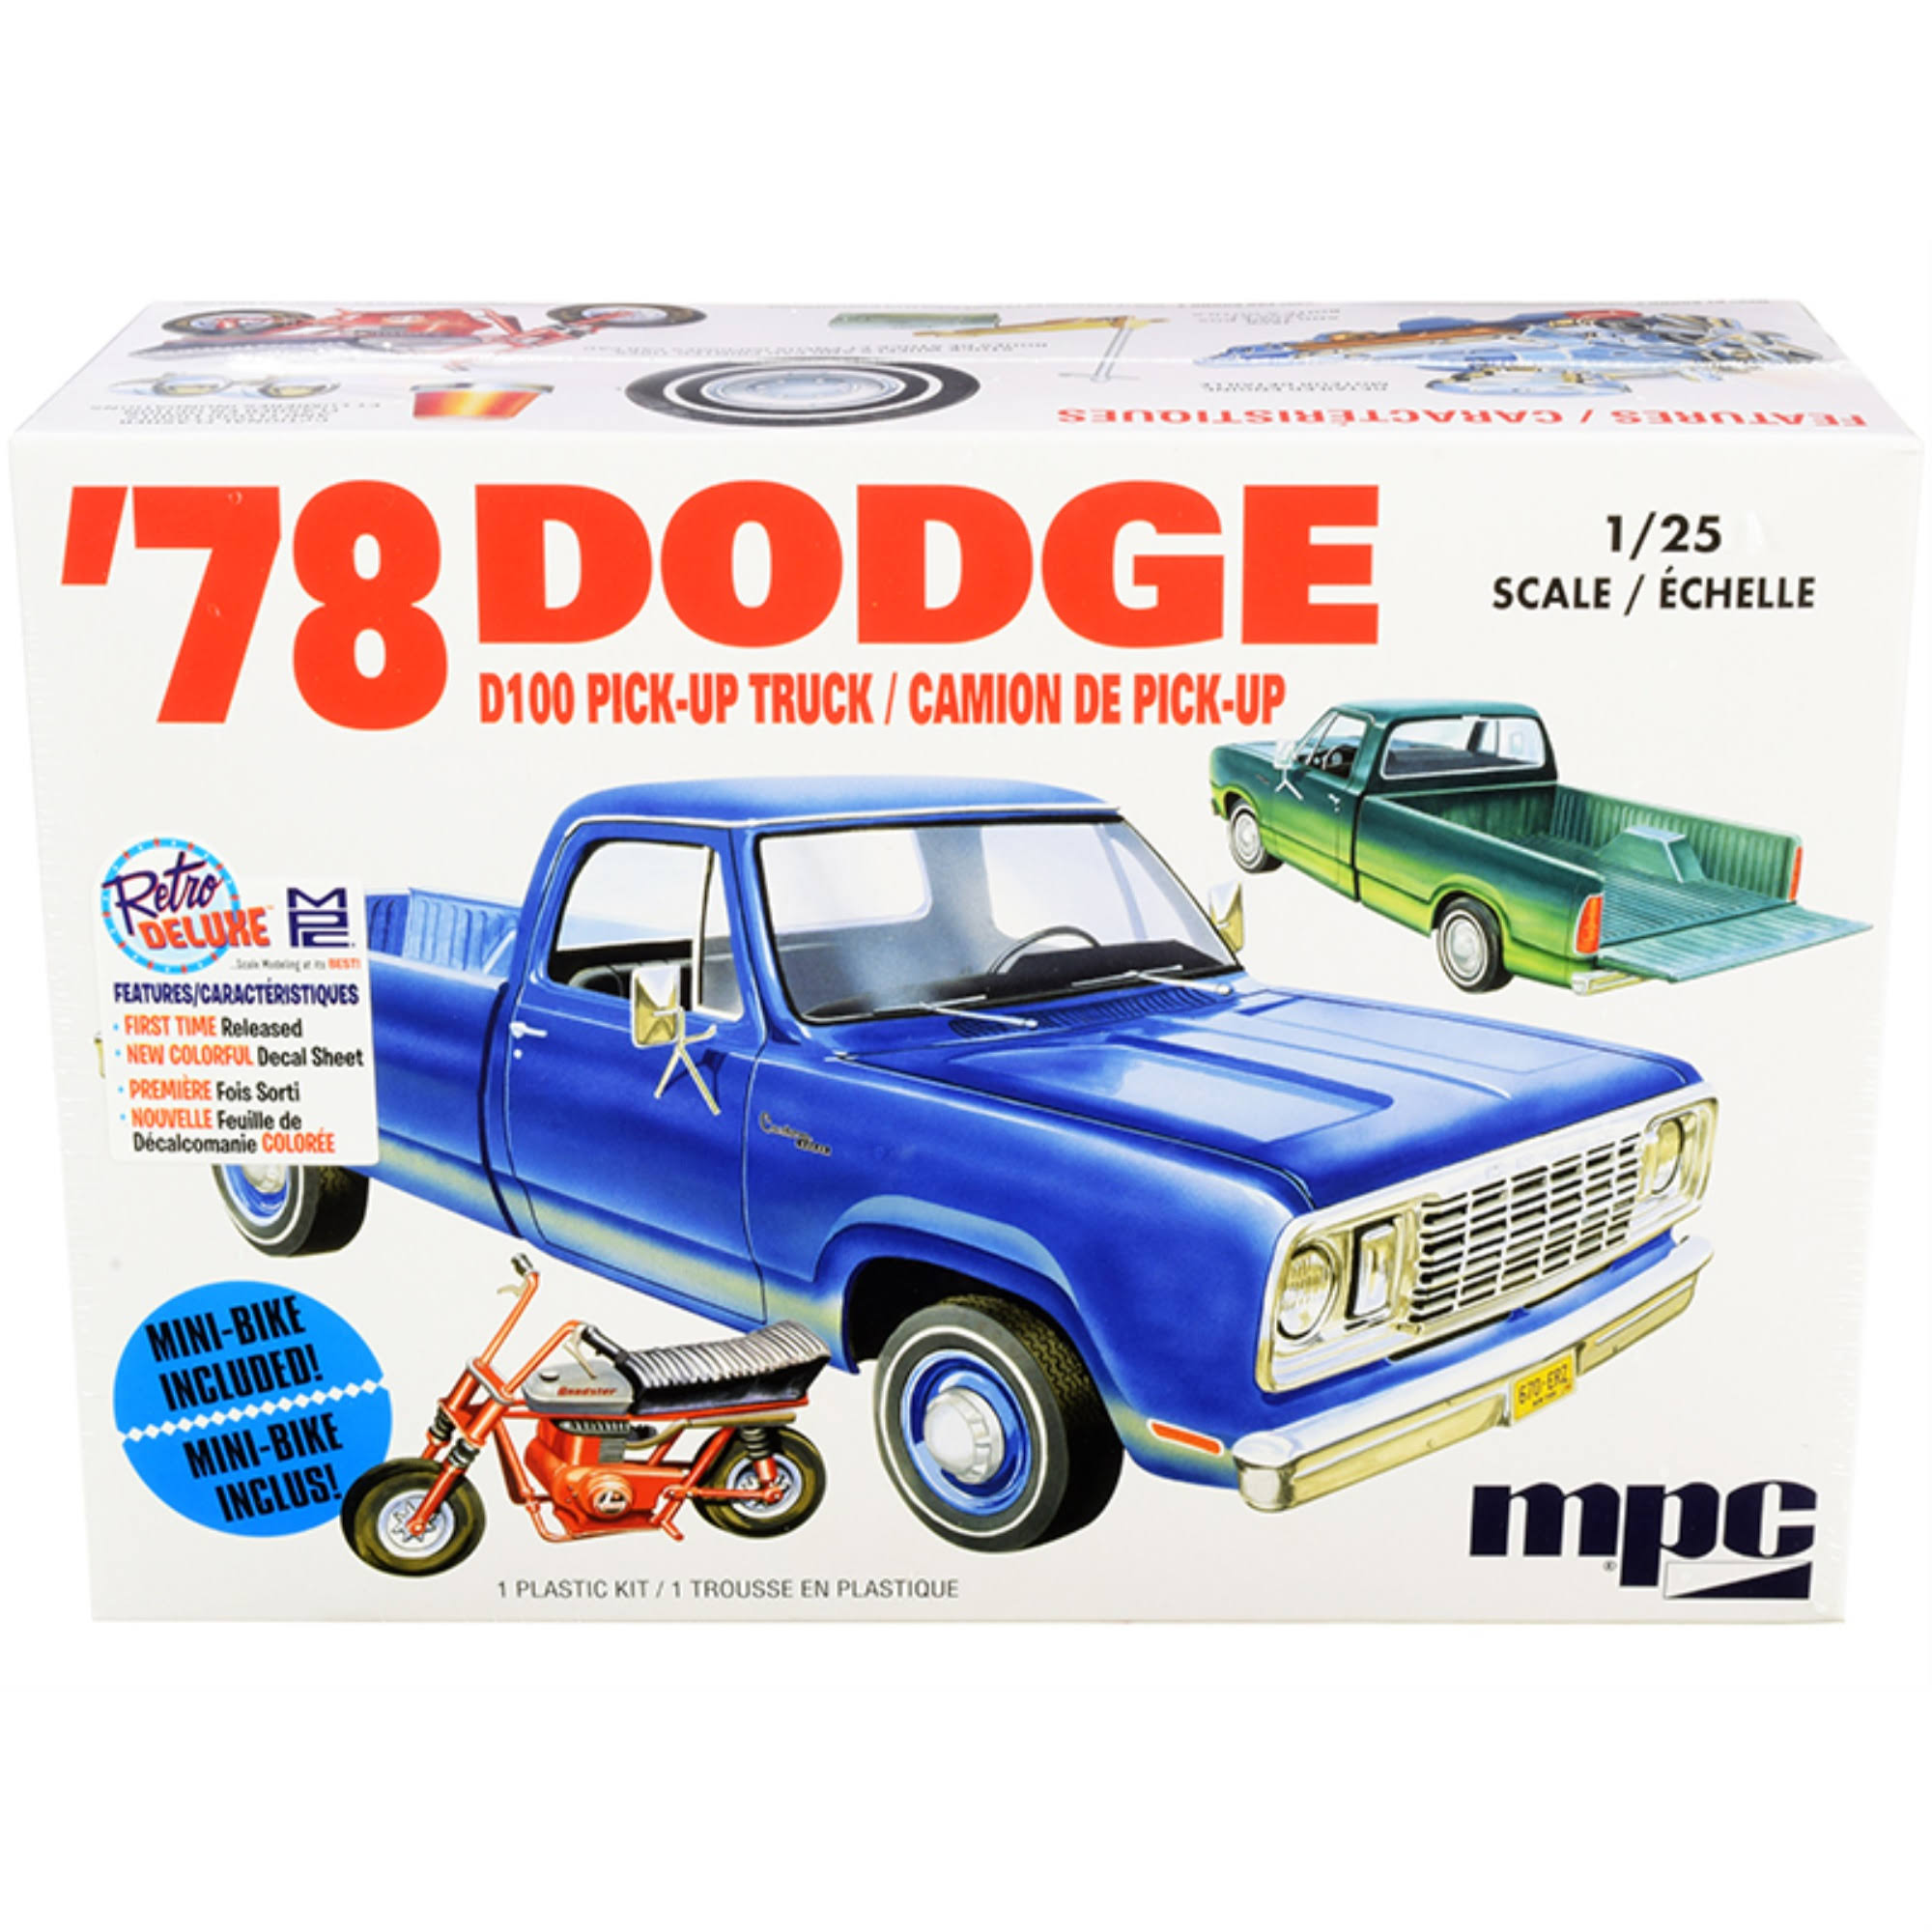 MPC Mpc901m Skill 2 Model Kit 1978 Dodge D100 Pickup Truck with Mini Bike 1/25 Scale Model